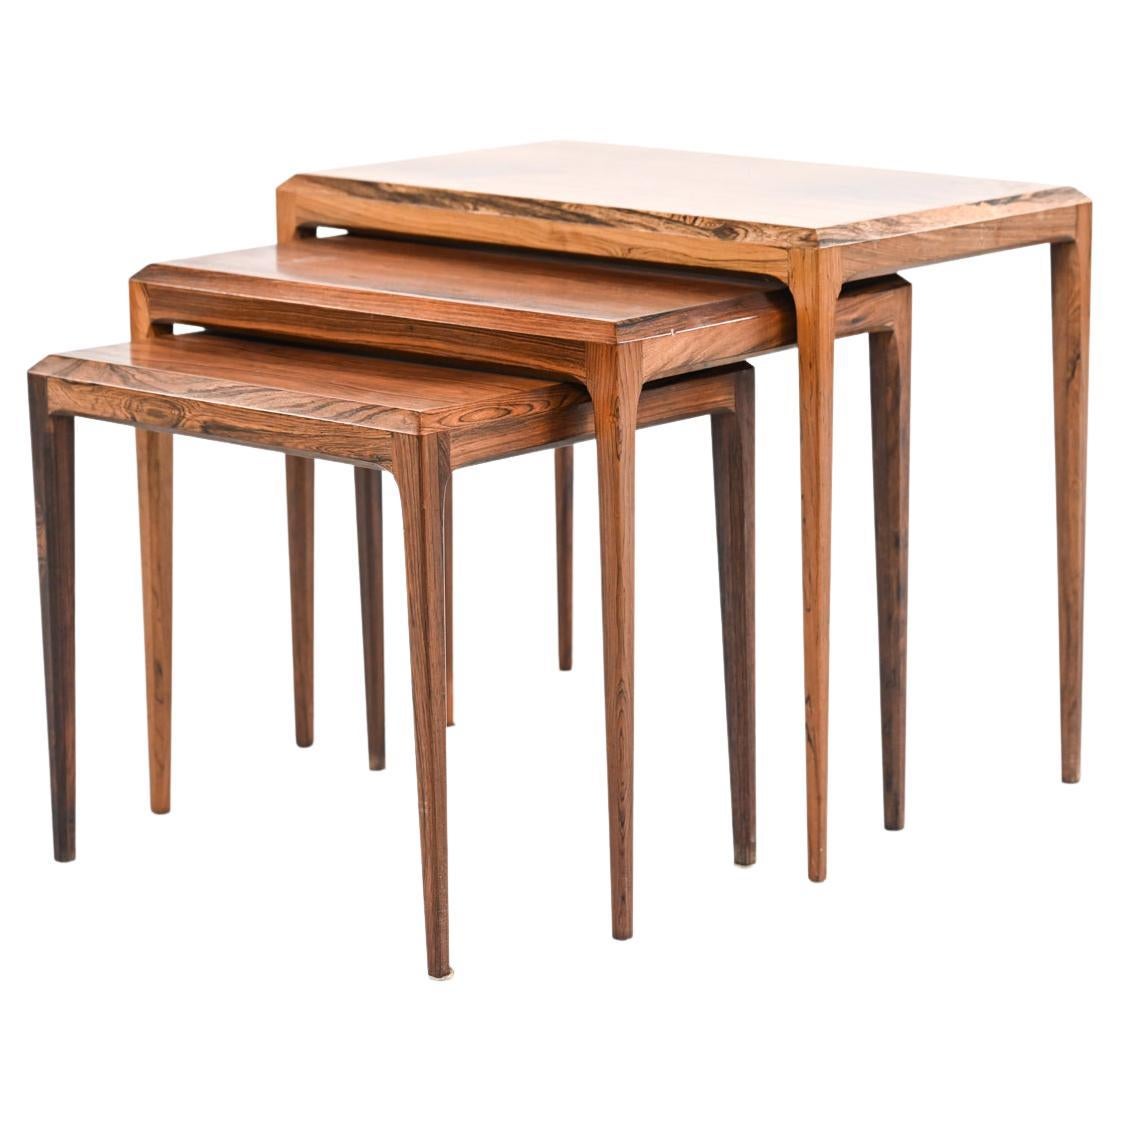 Set of 3 Rosewood Nesting Tables, Johannes Andersen for Silkeborg, c. 1960's